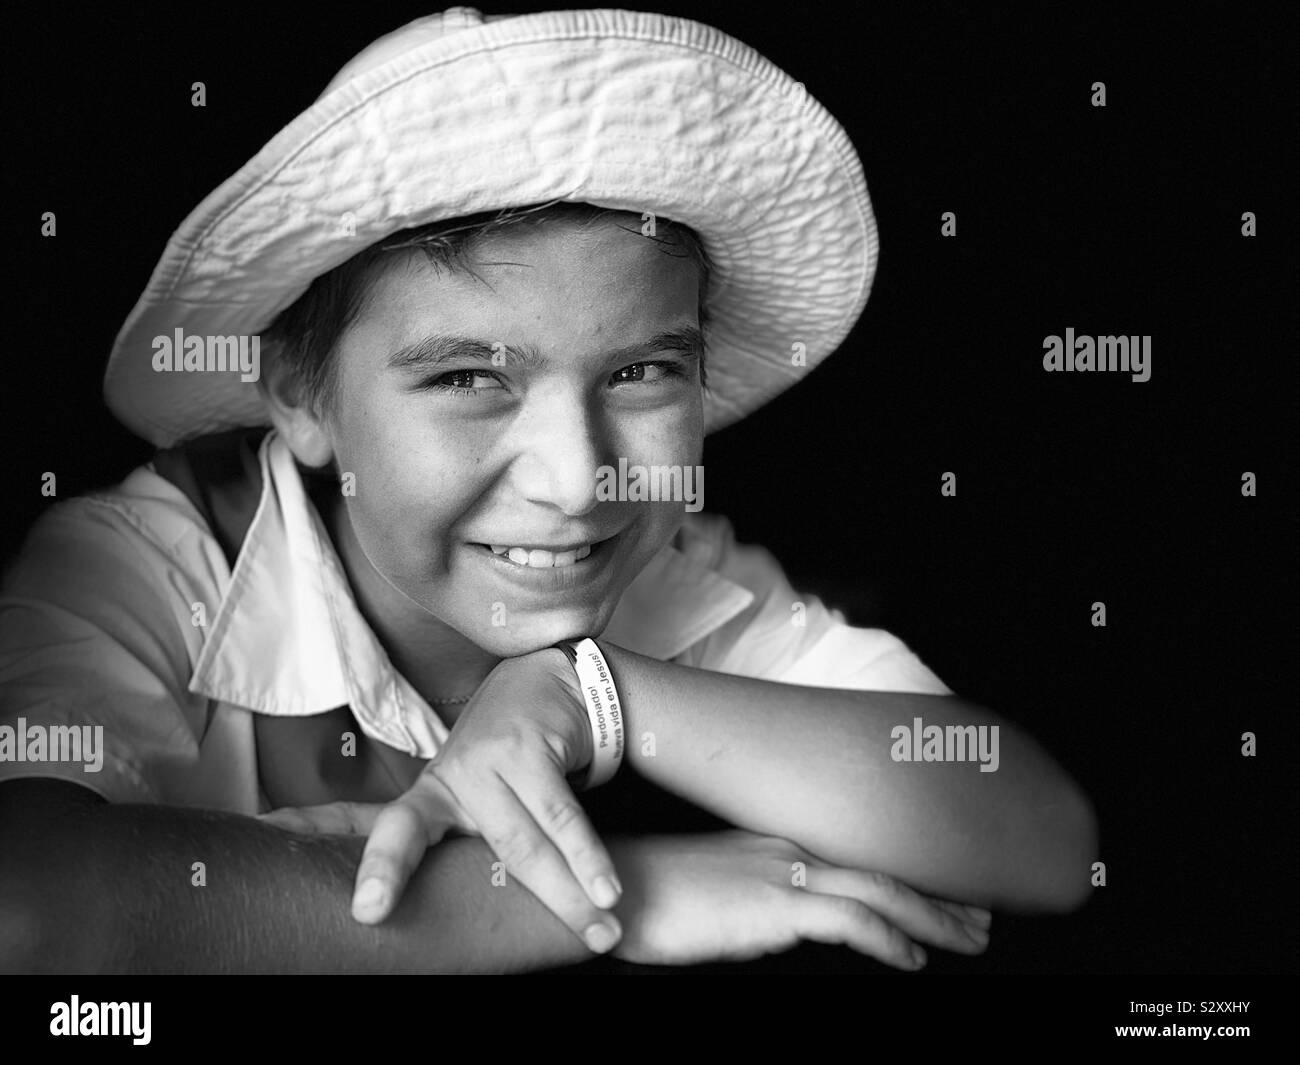 School boy in Costa Rica Stock Photo